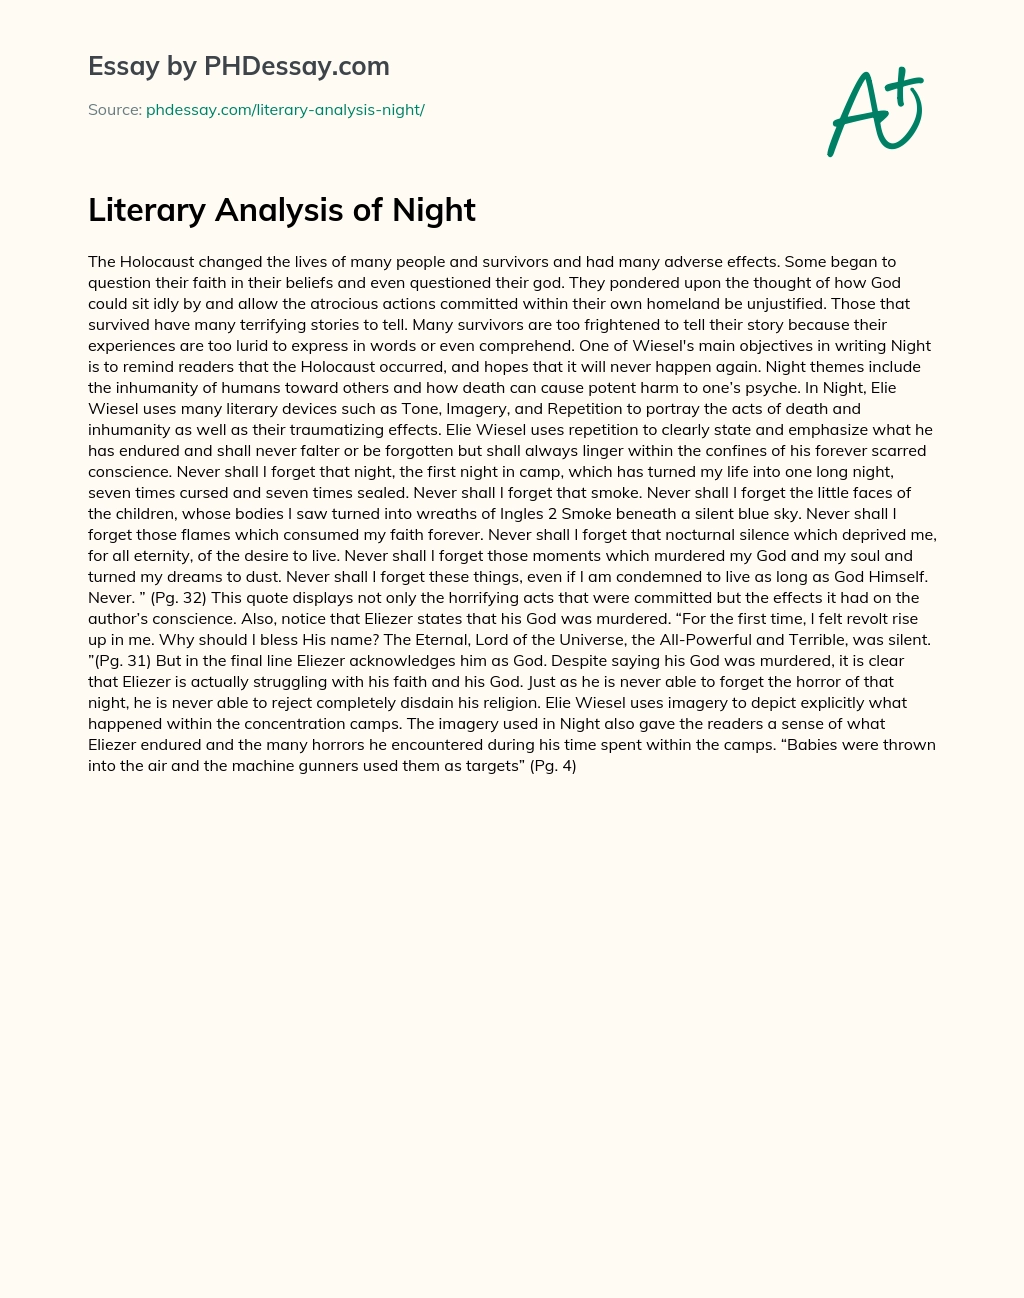 Literary Analysis of Night essay